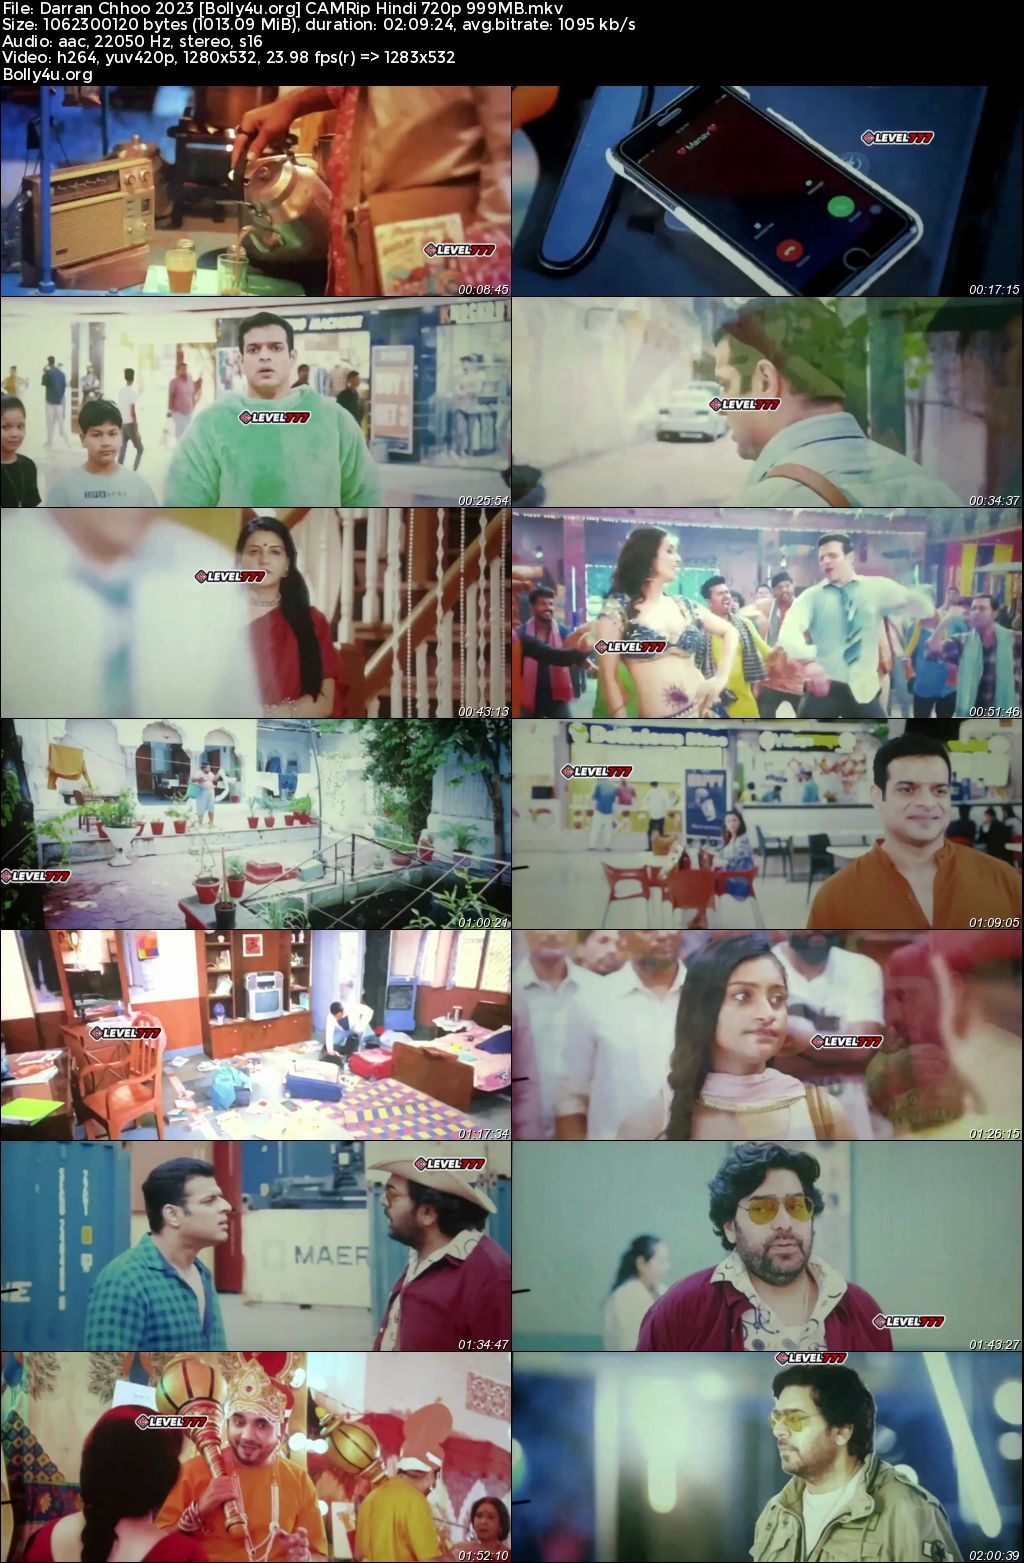 Darran Chhoo 2023 CAMRip Hindi Full Movie Download 1080p 720p 480p